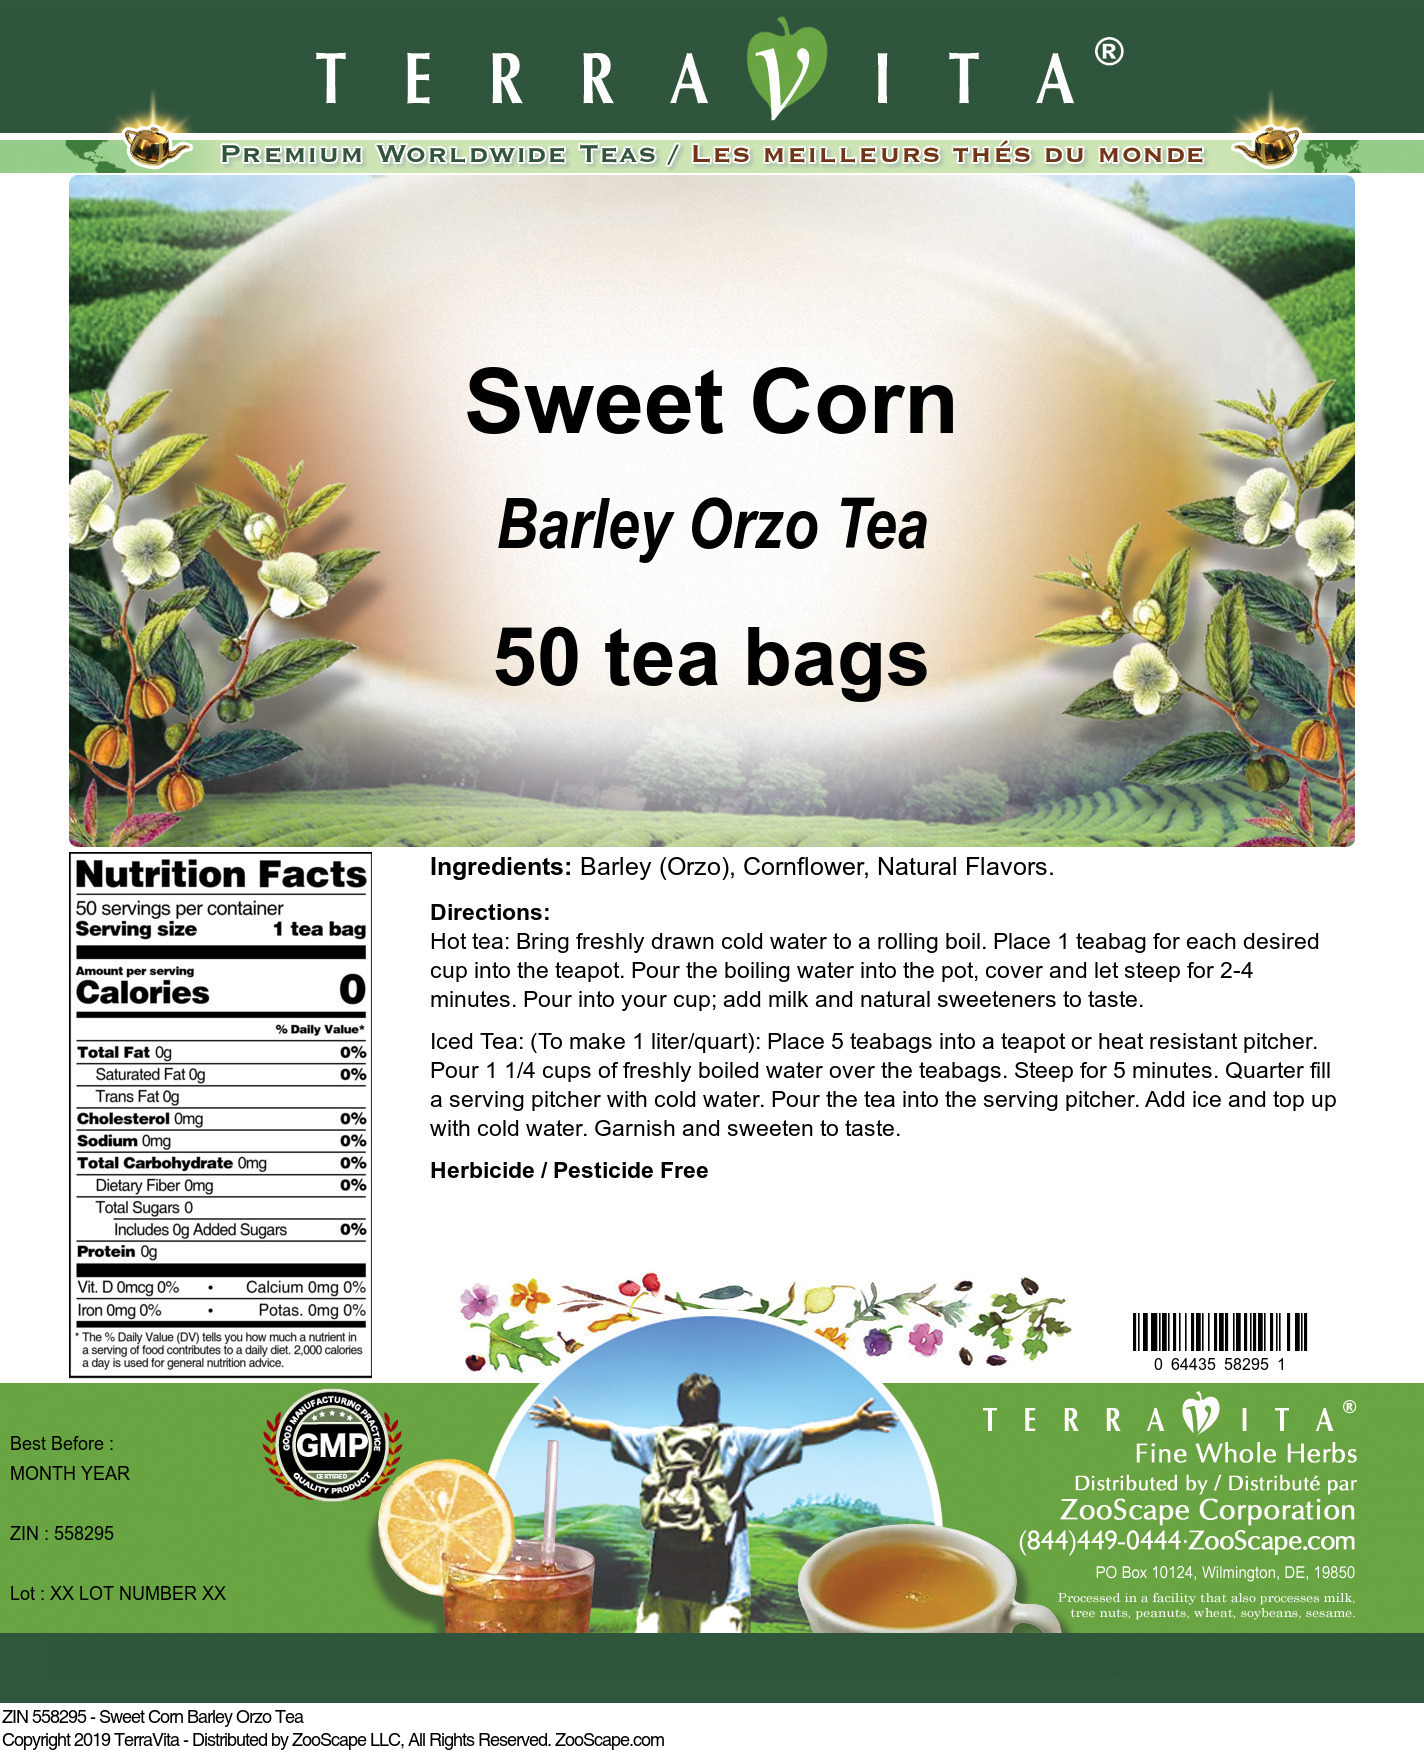 Sweet Corn Barley Orzo Tea - Label